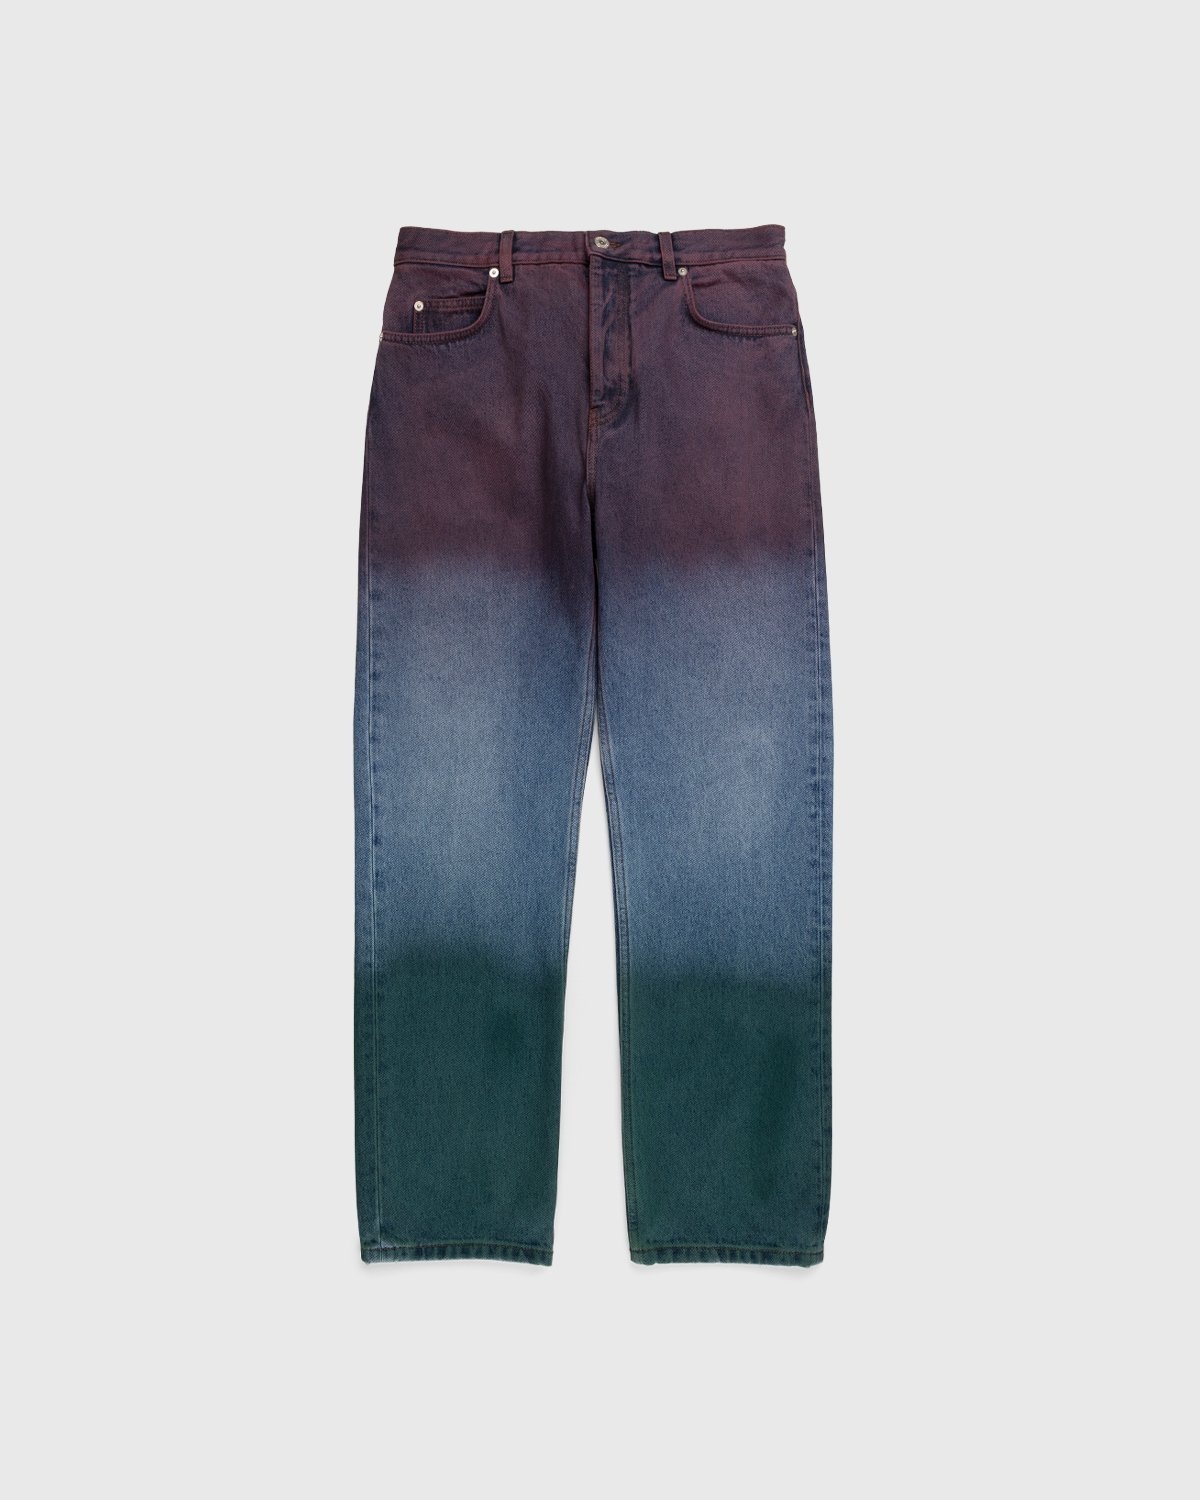 Loewe – Paula's Ibiza Tricolor Denim Trousers Red/Blue/Green - Pants - Blue - Image 1